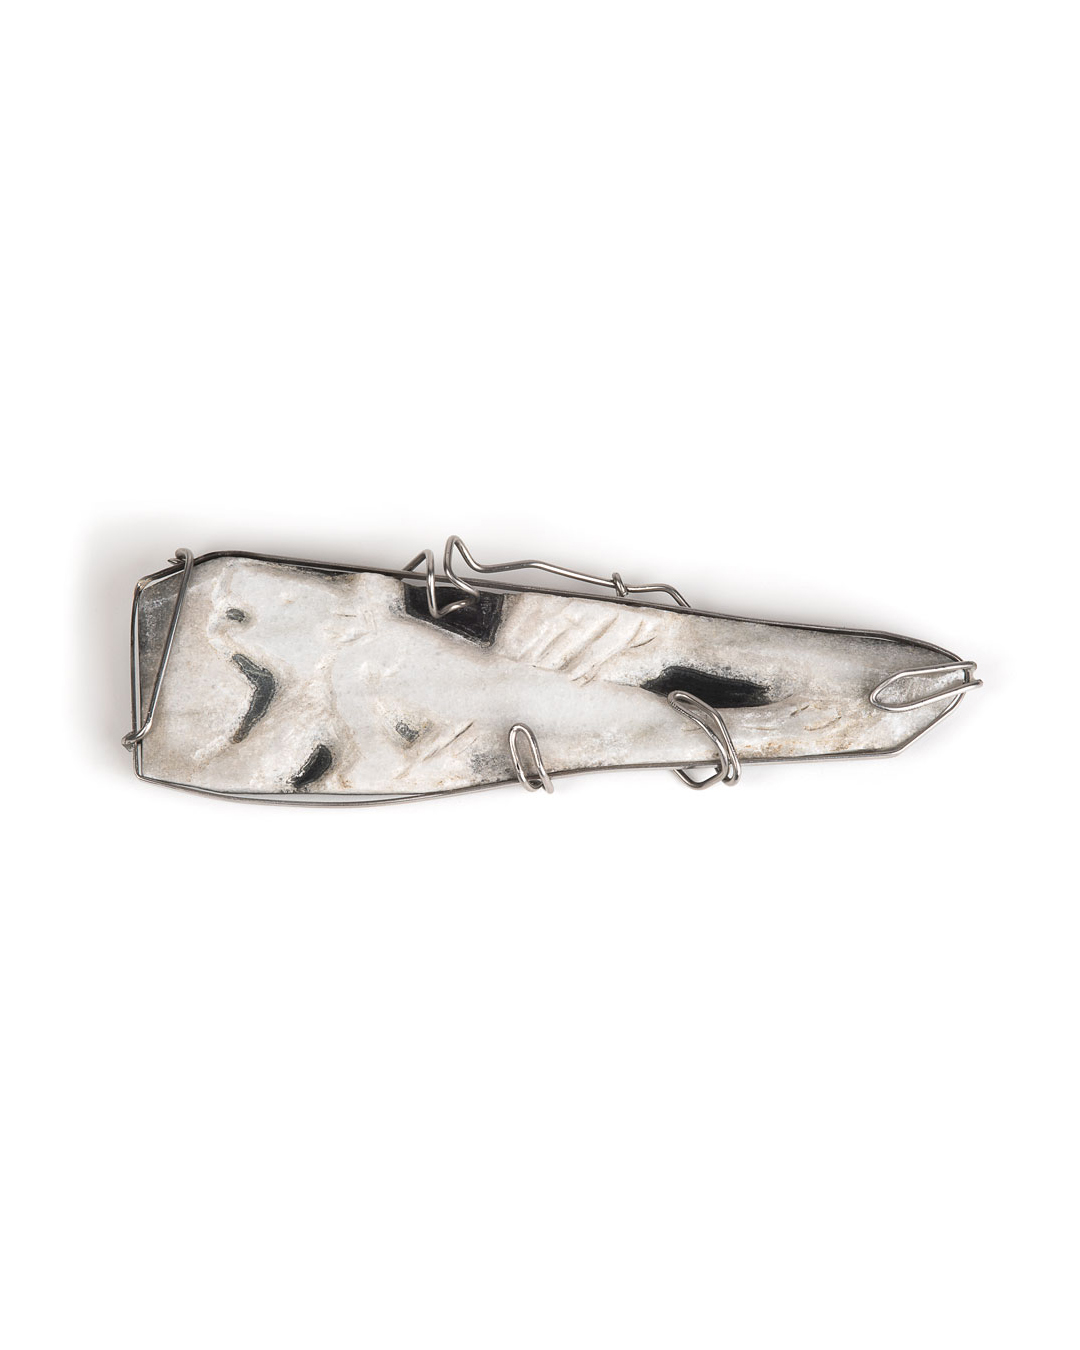 Rudolf Kocéa, Target Lioness, 2019, brooch; nephrite, marble, stainless steel, 165 x 55 x 23 mm, €2200